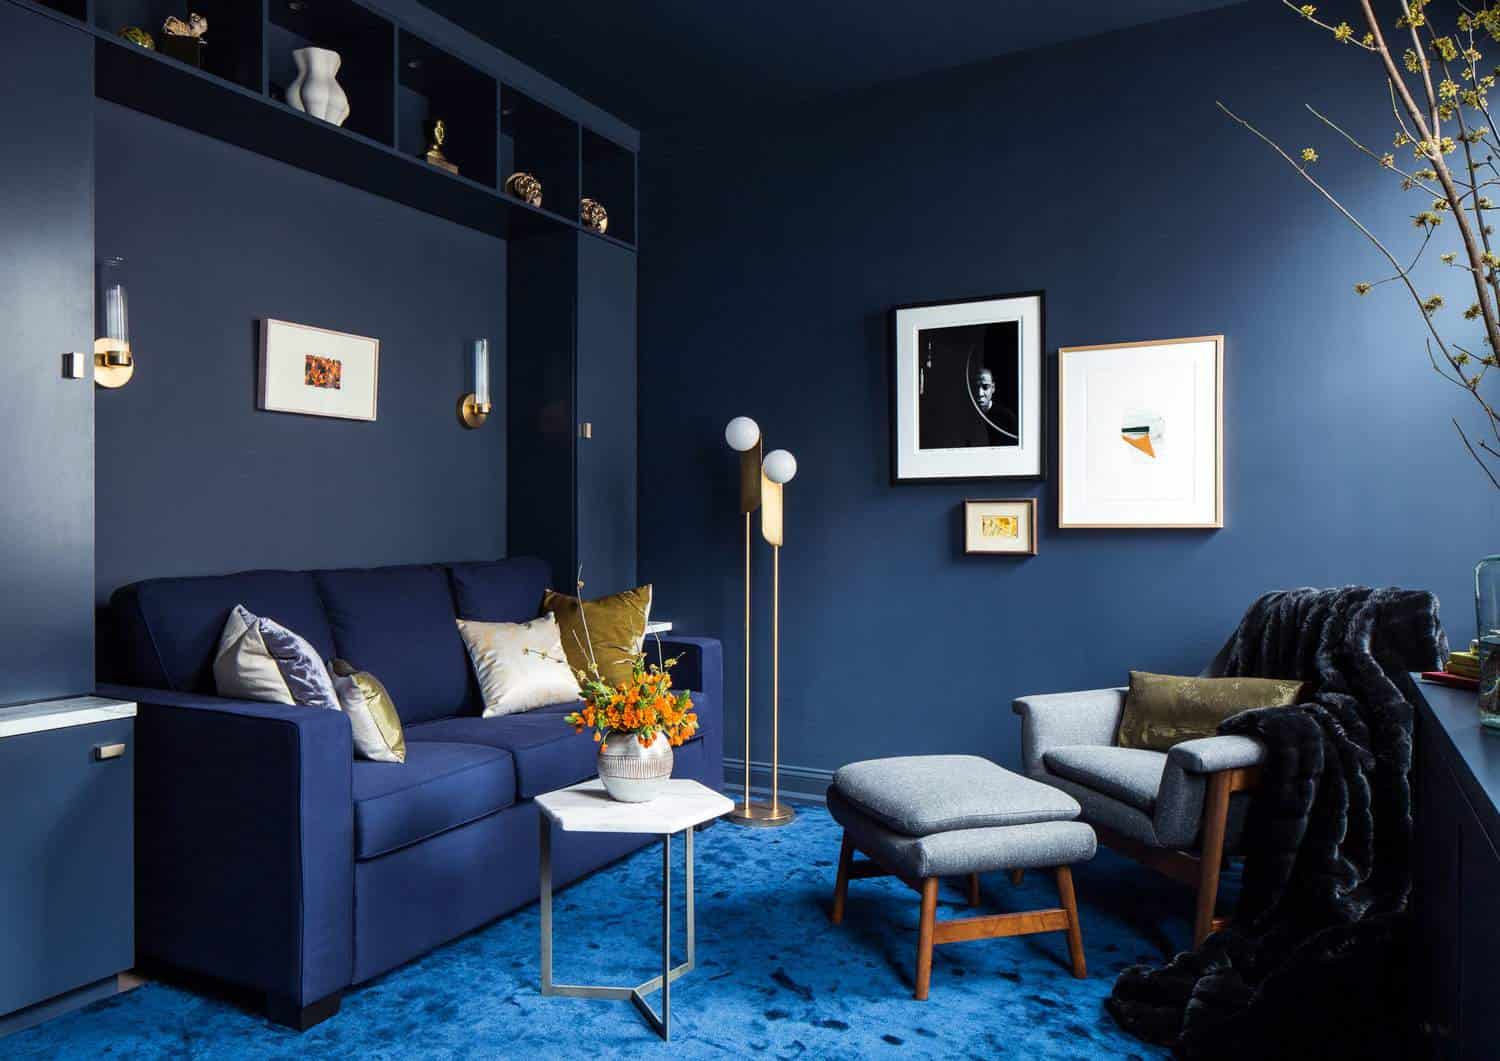 Small living room decoration interior design idea with blue colour walls and sofa